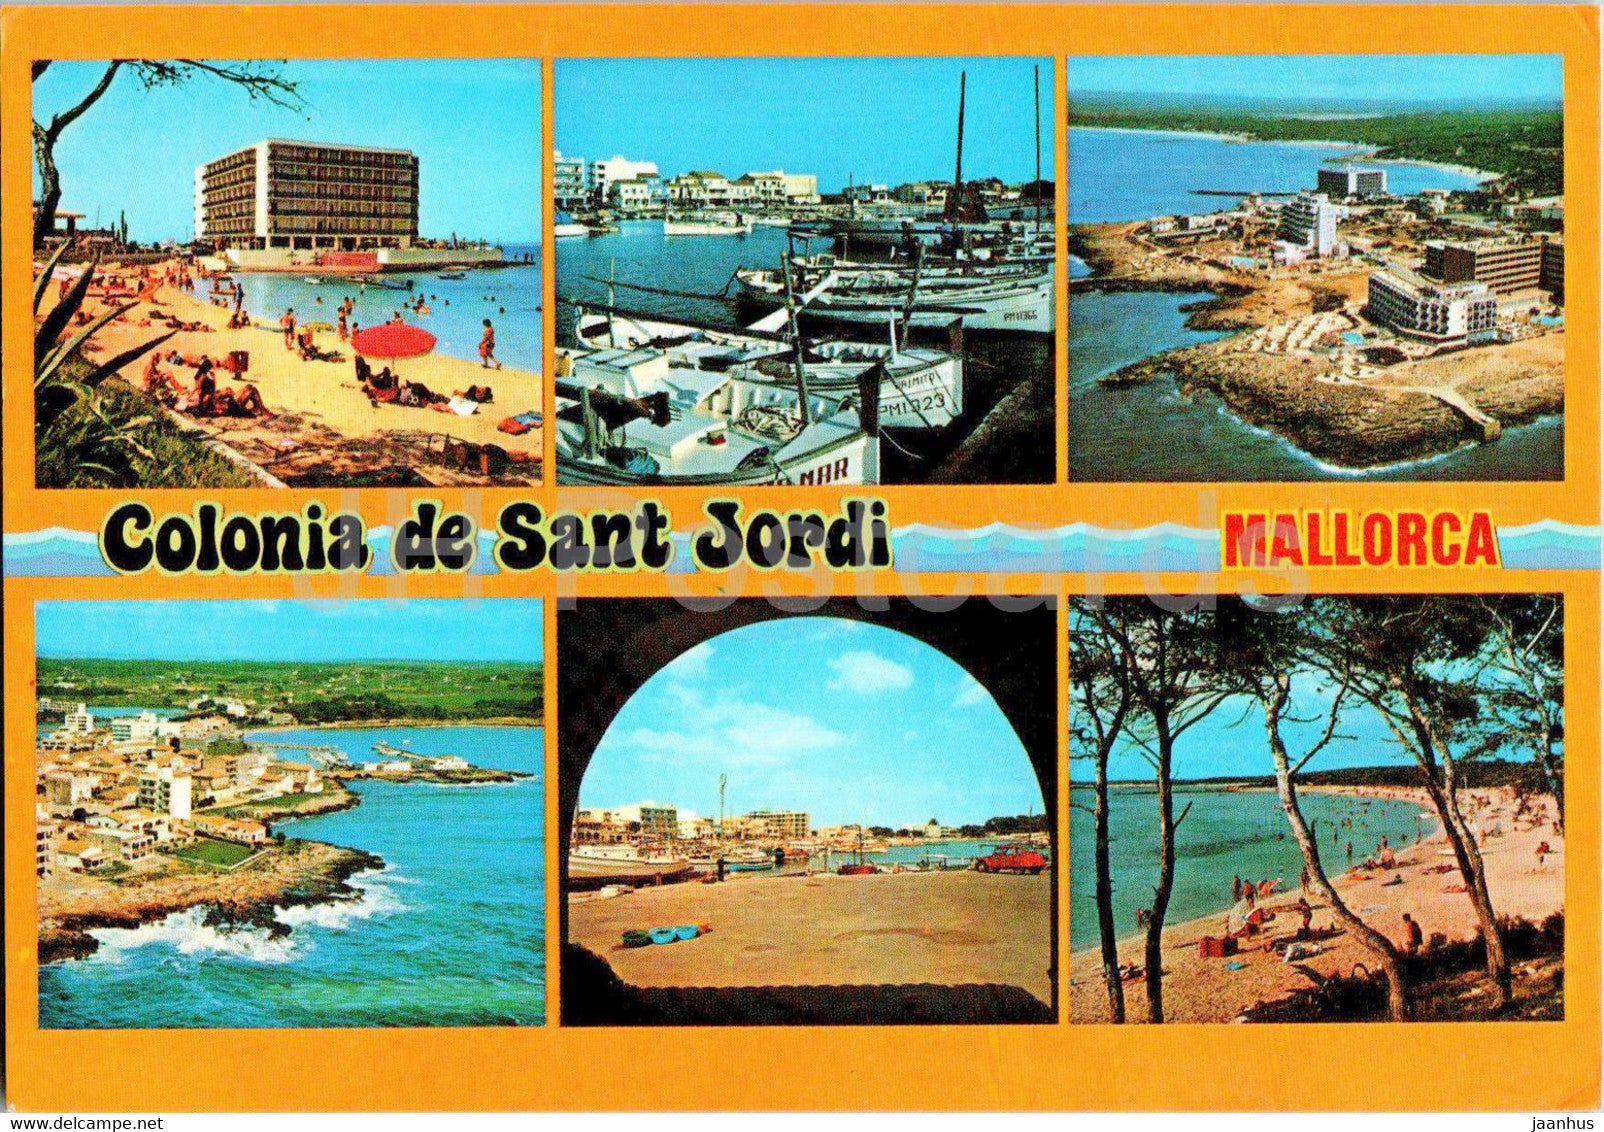 Colonia de Sant Jordi - Mallorca - multiview - 13119 - 1979 - Spain - used - JH Postcards